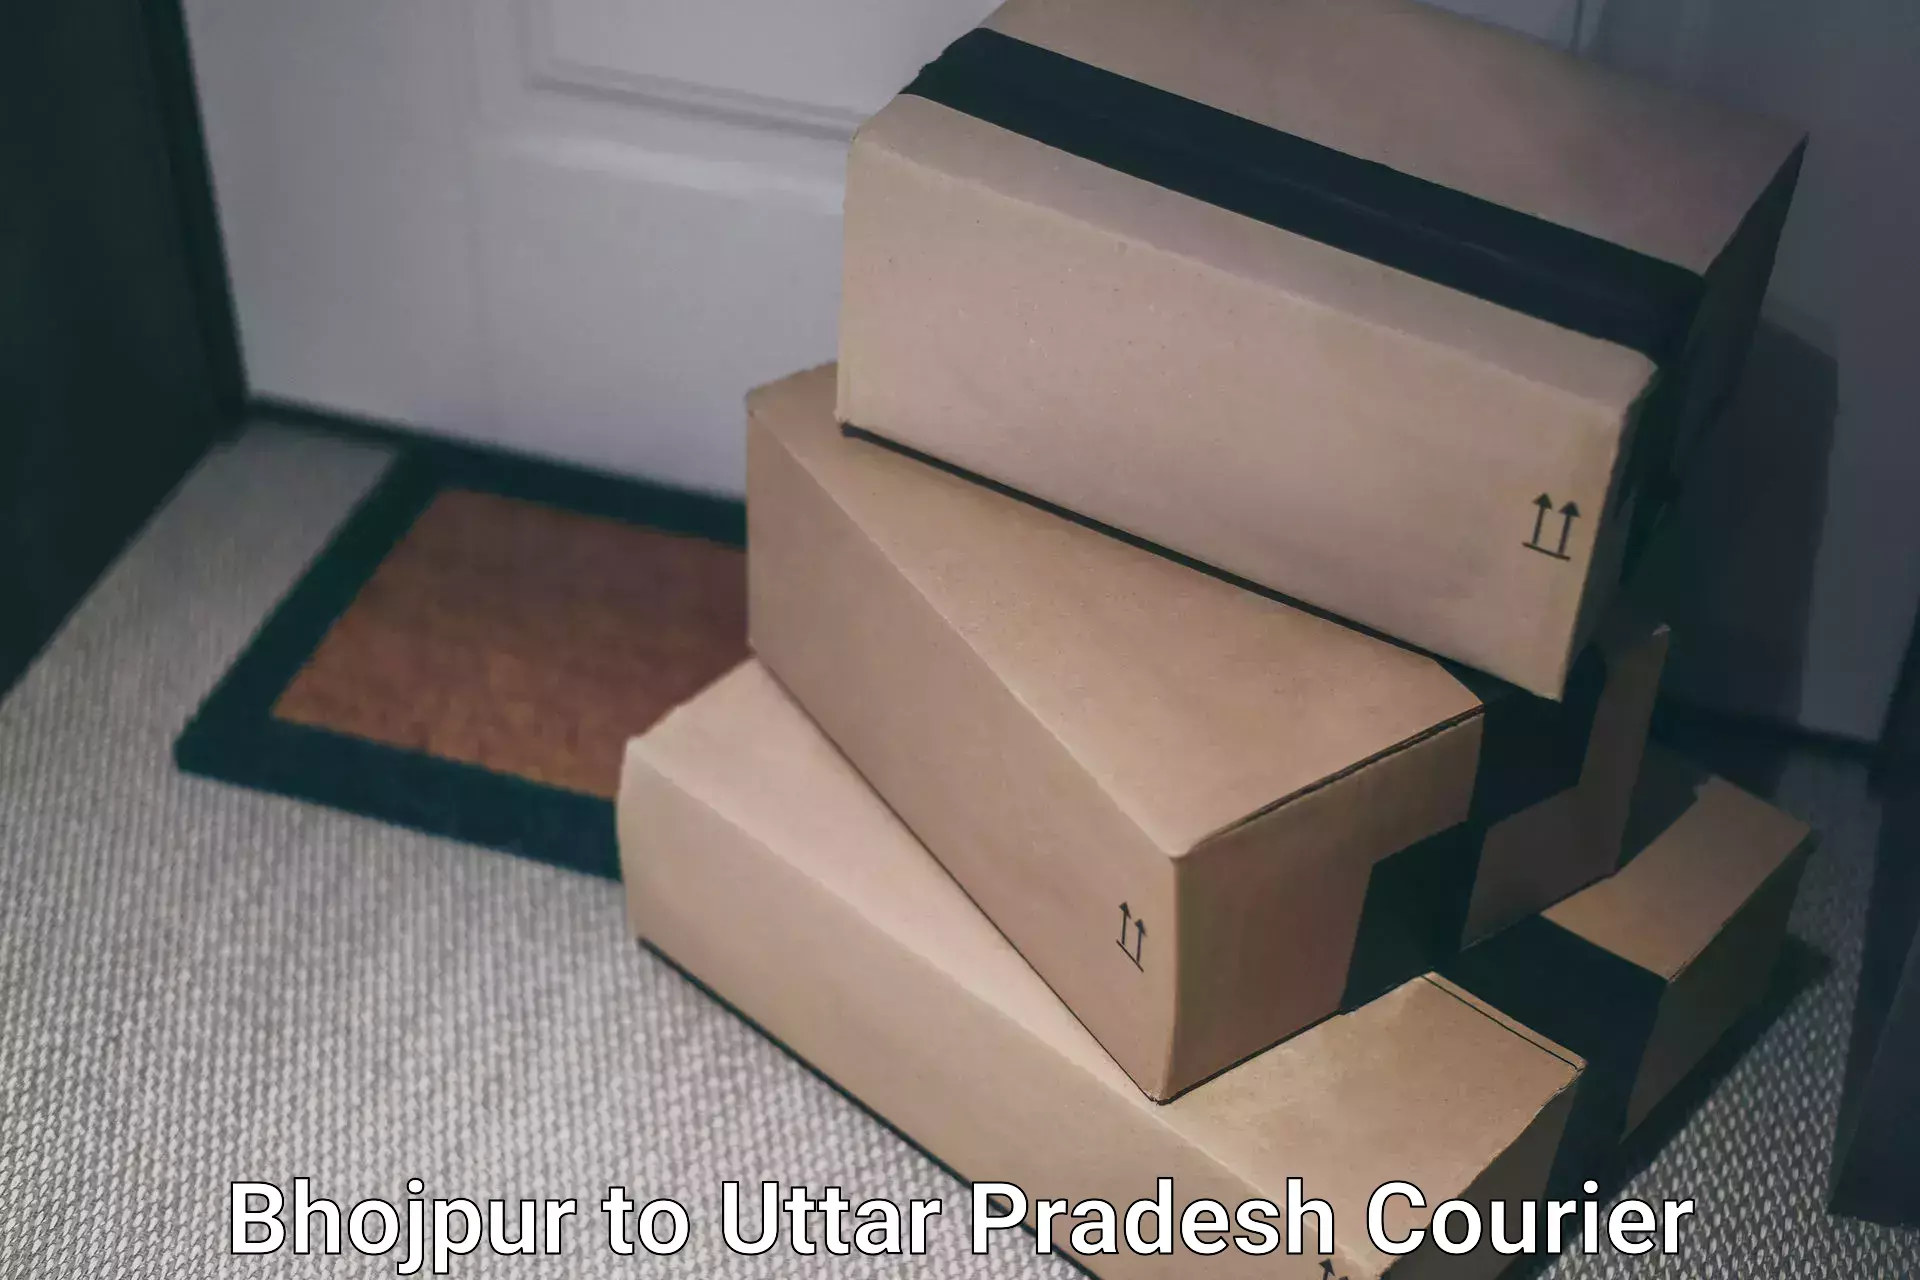 Courier service partnerships Bhojpur to Uttar Pradesh